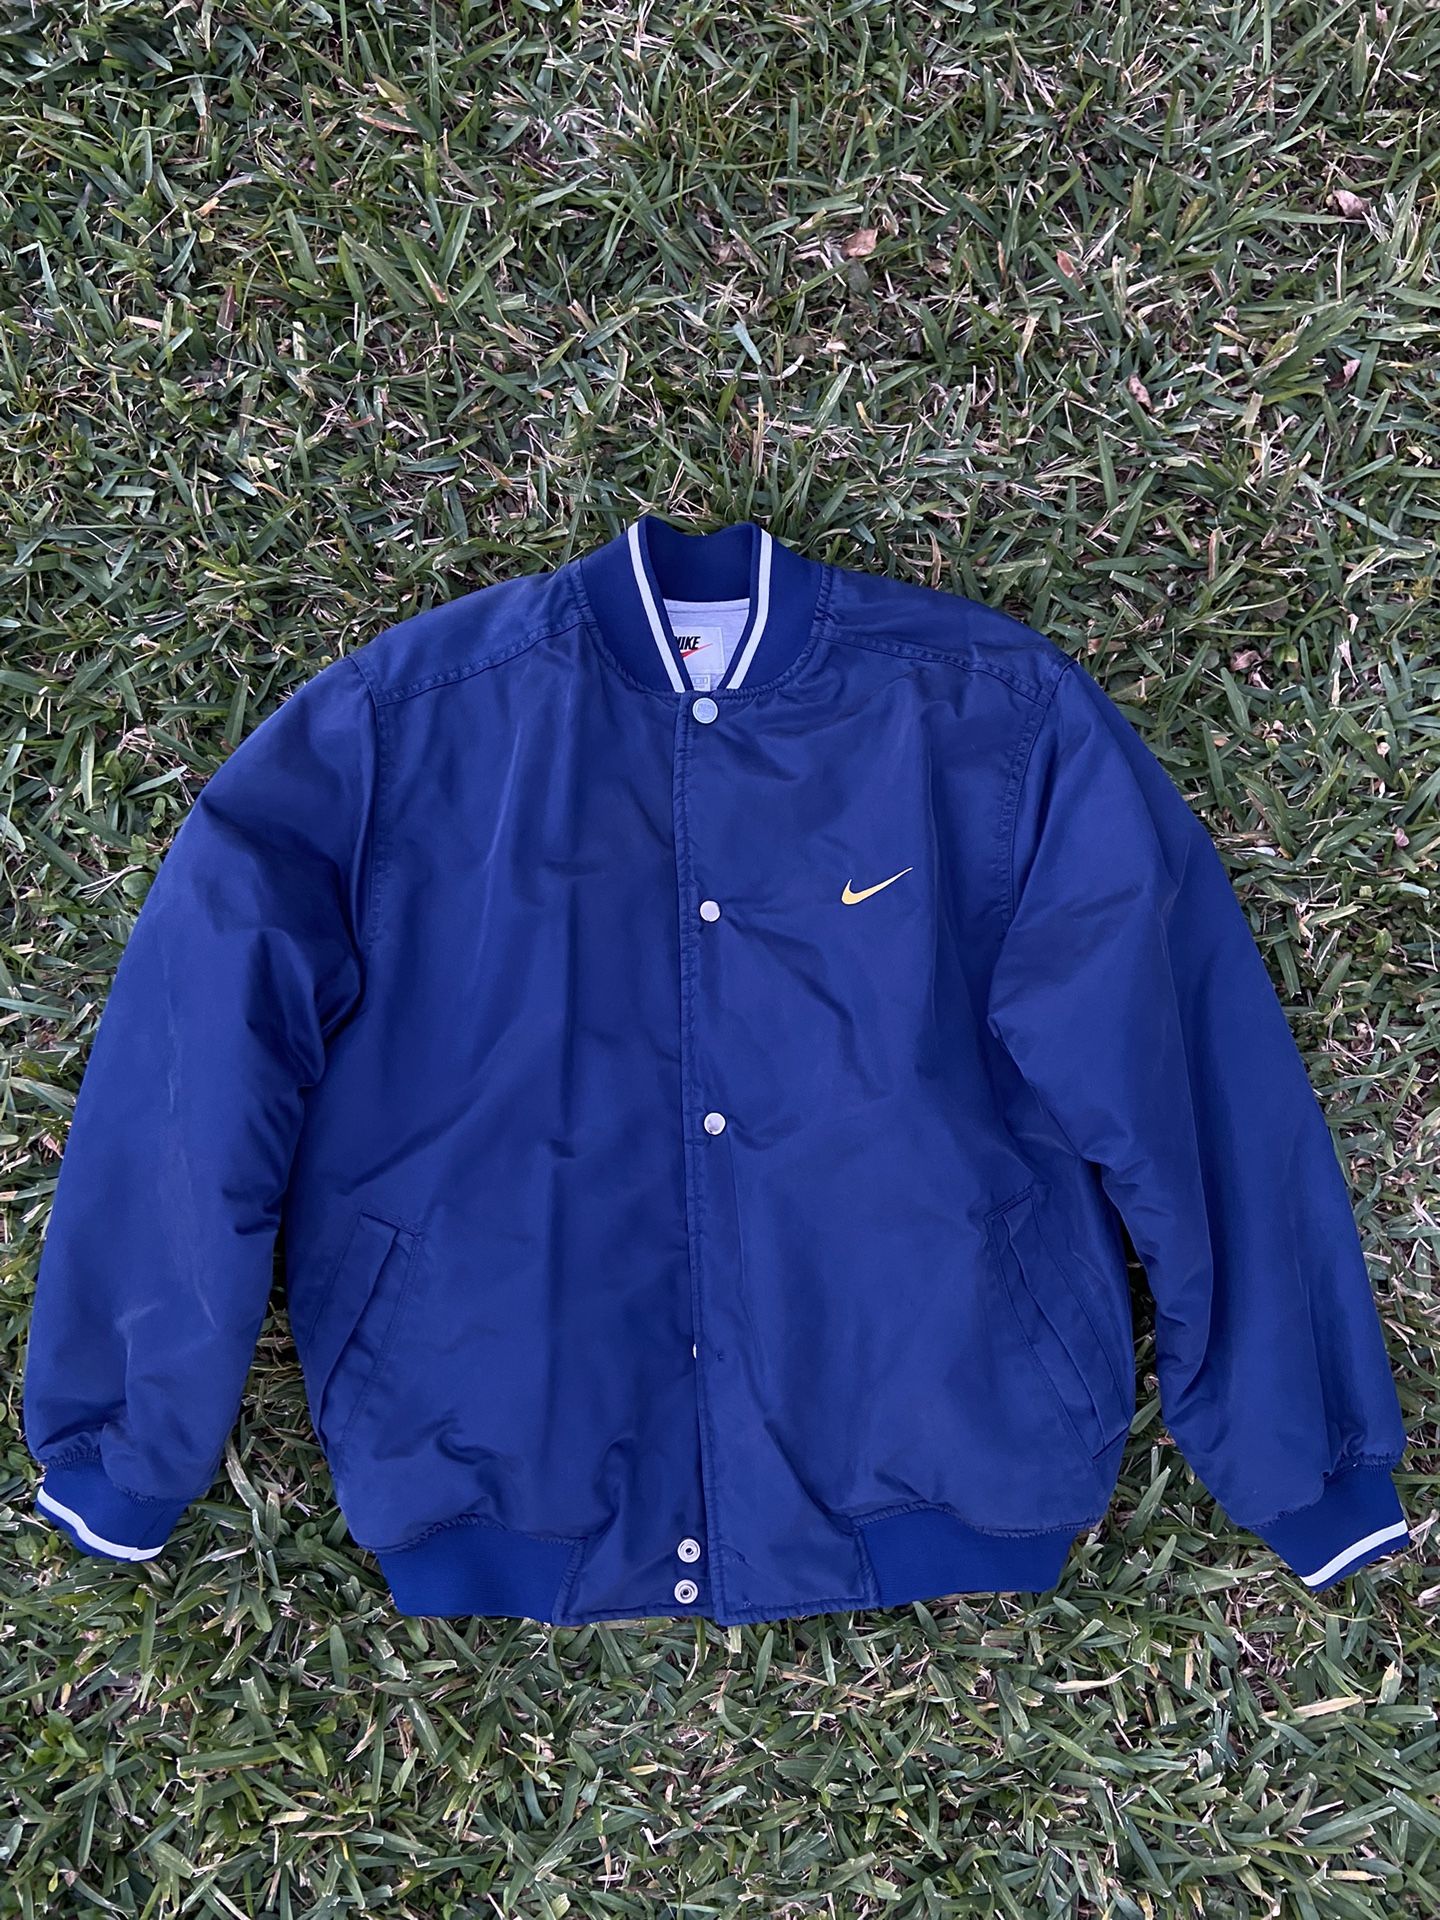 Vintage Nike Button Up Bomber Jacket